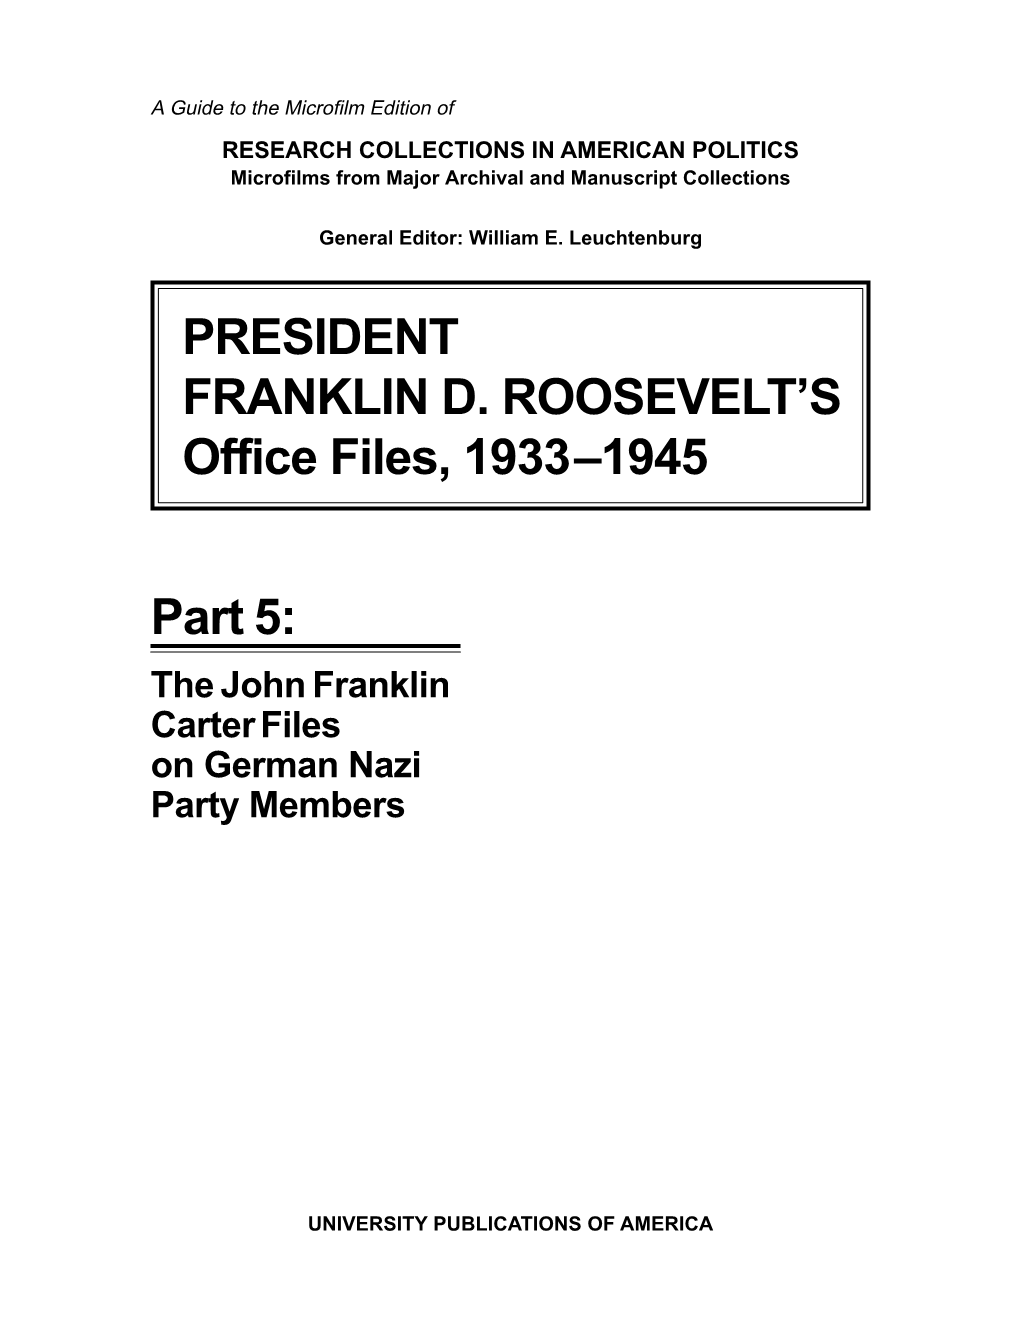 PRESIDENT FRANKLIN D. ROOSEVELT's Office Files, 1933